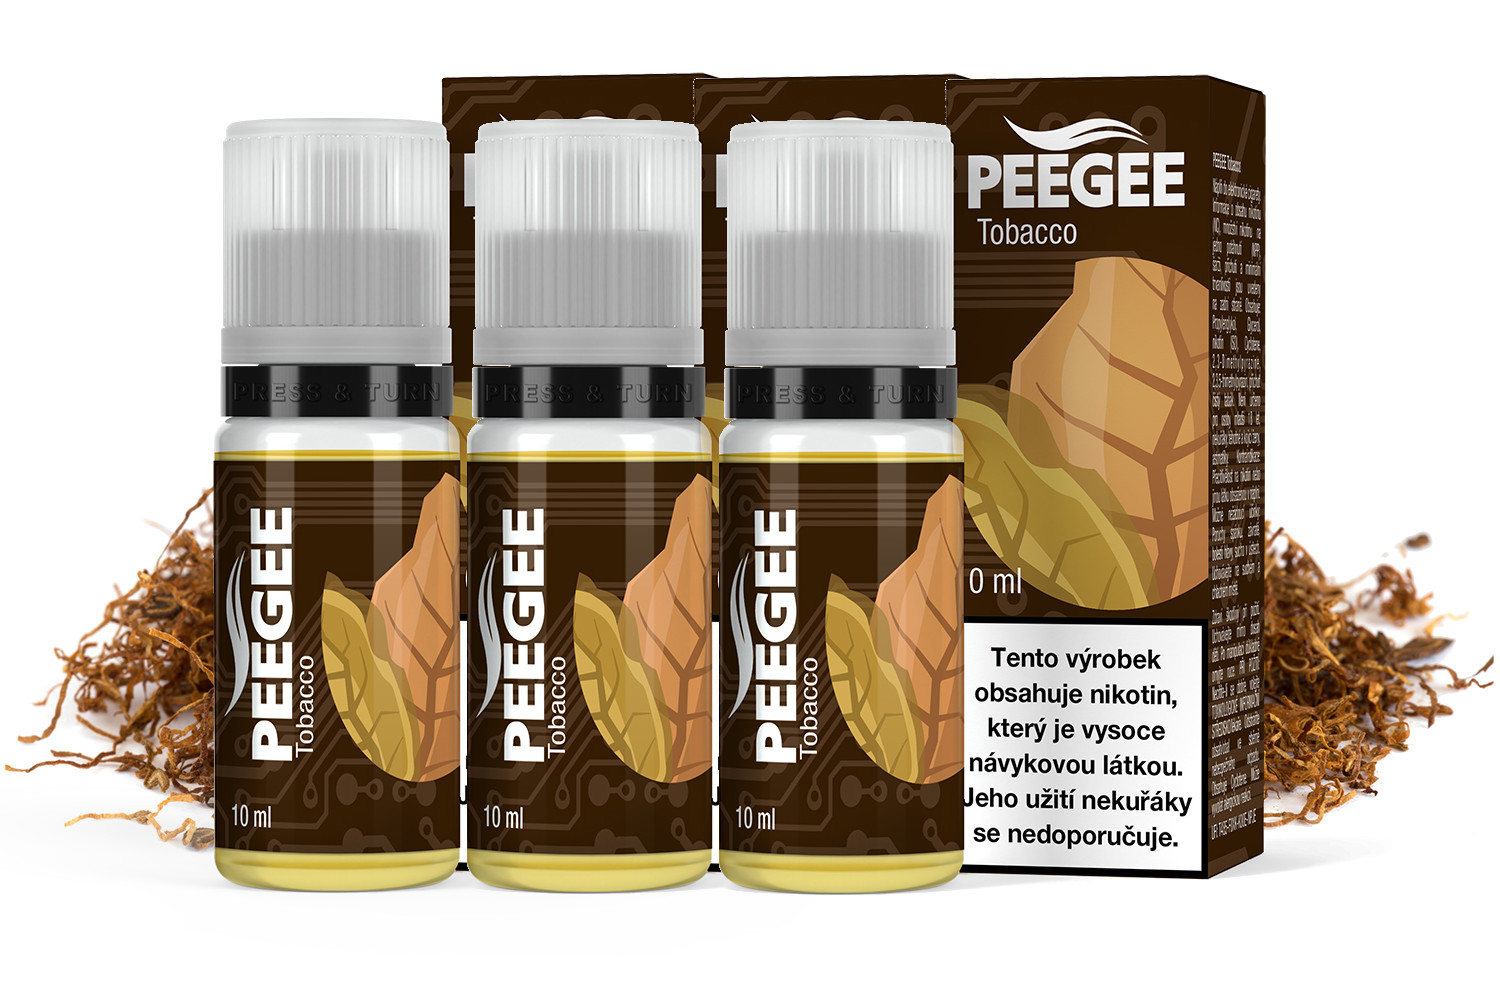 PEEGEE - Čistý tabák (Tobacco) 3x10ml Obsah nikotinu: 6mg